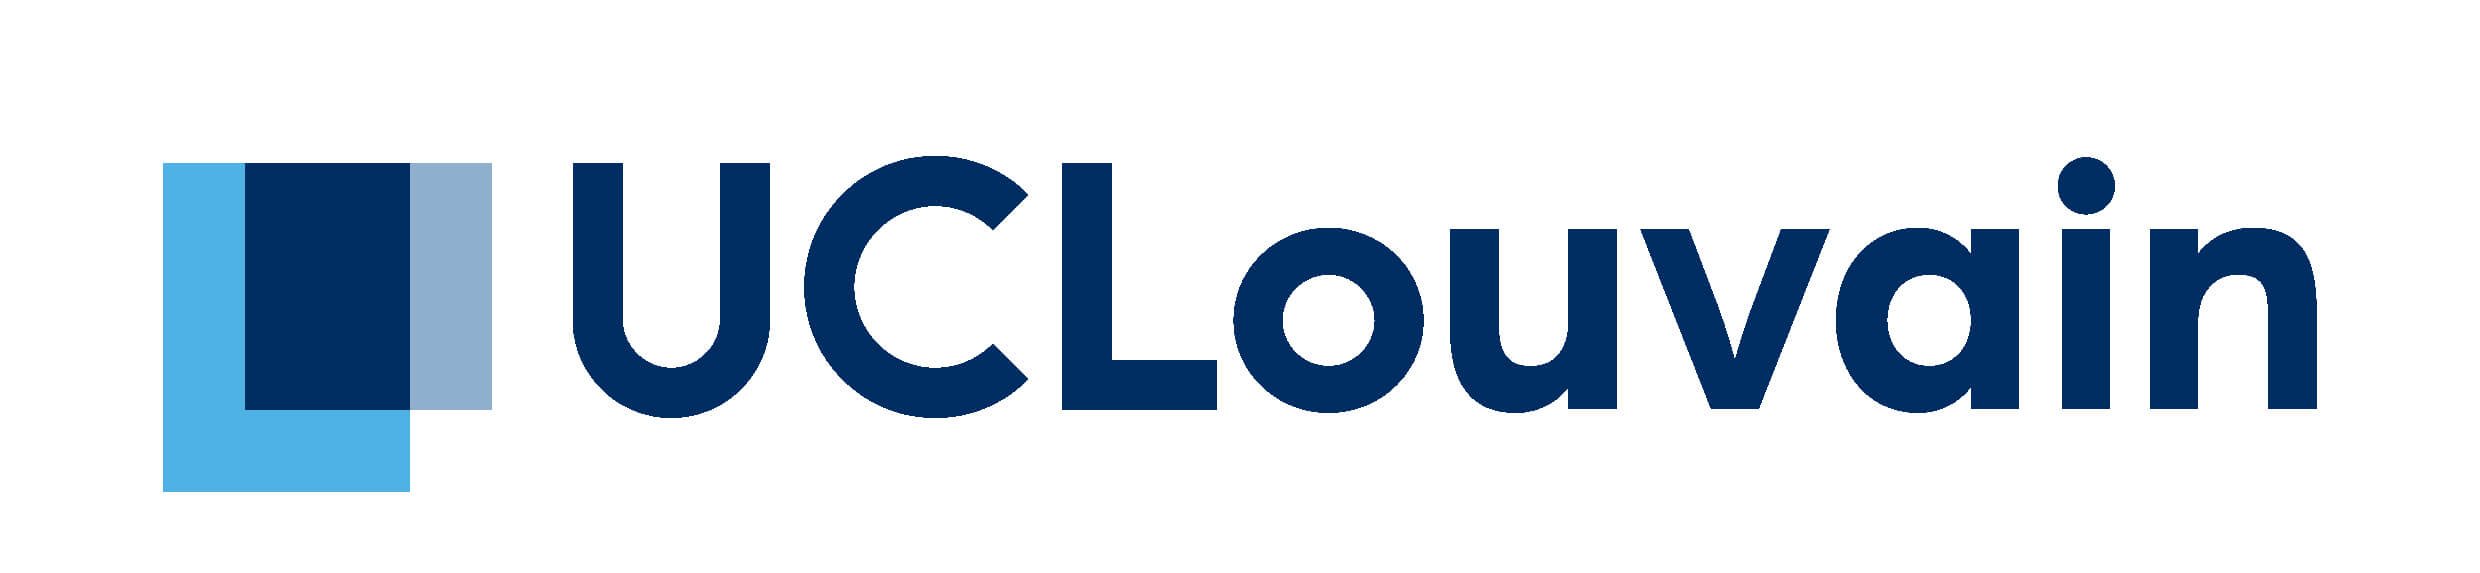 UCLouvain_Logo_Pos_CMJN